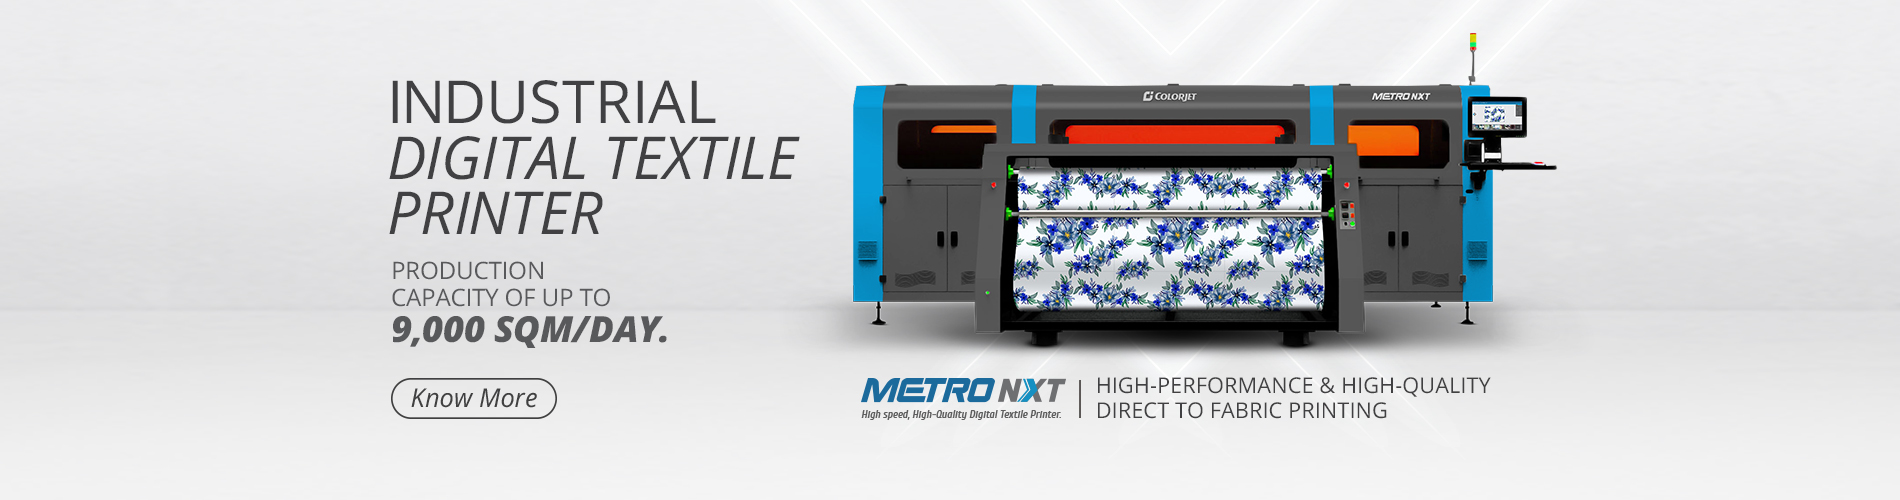 metro nxt digital textile printer